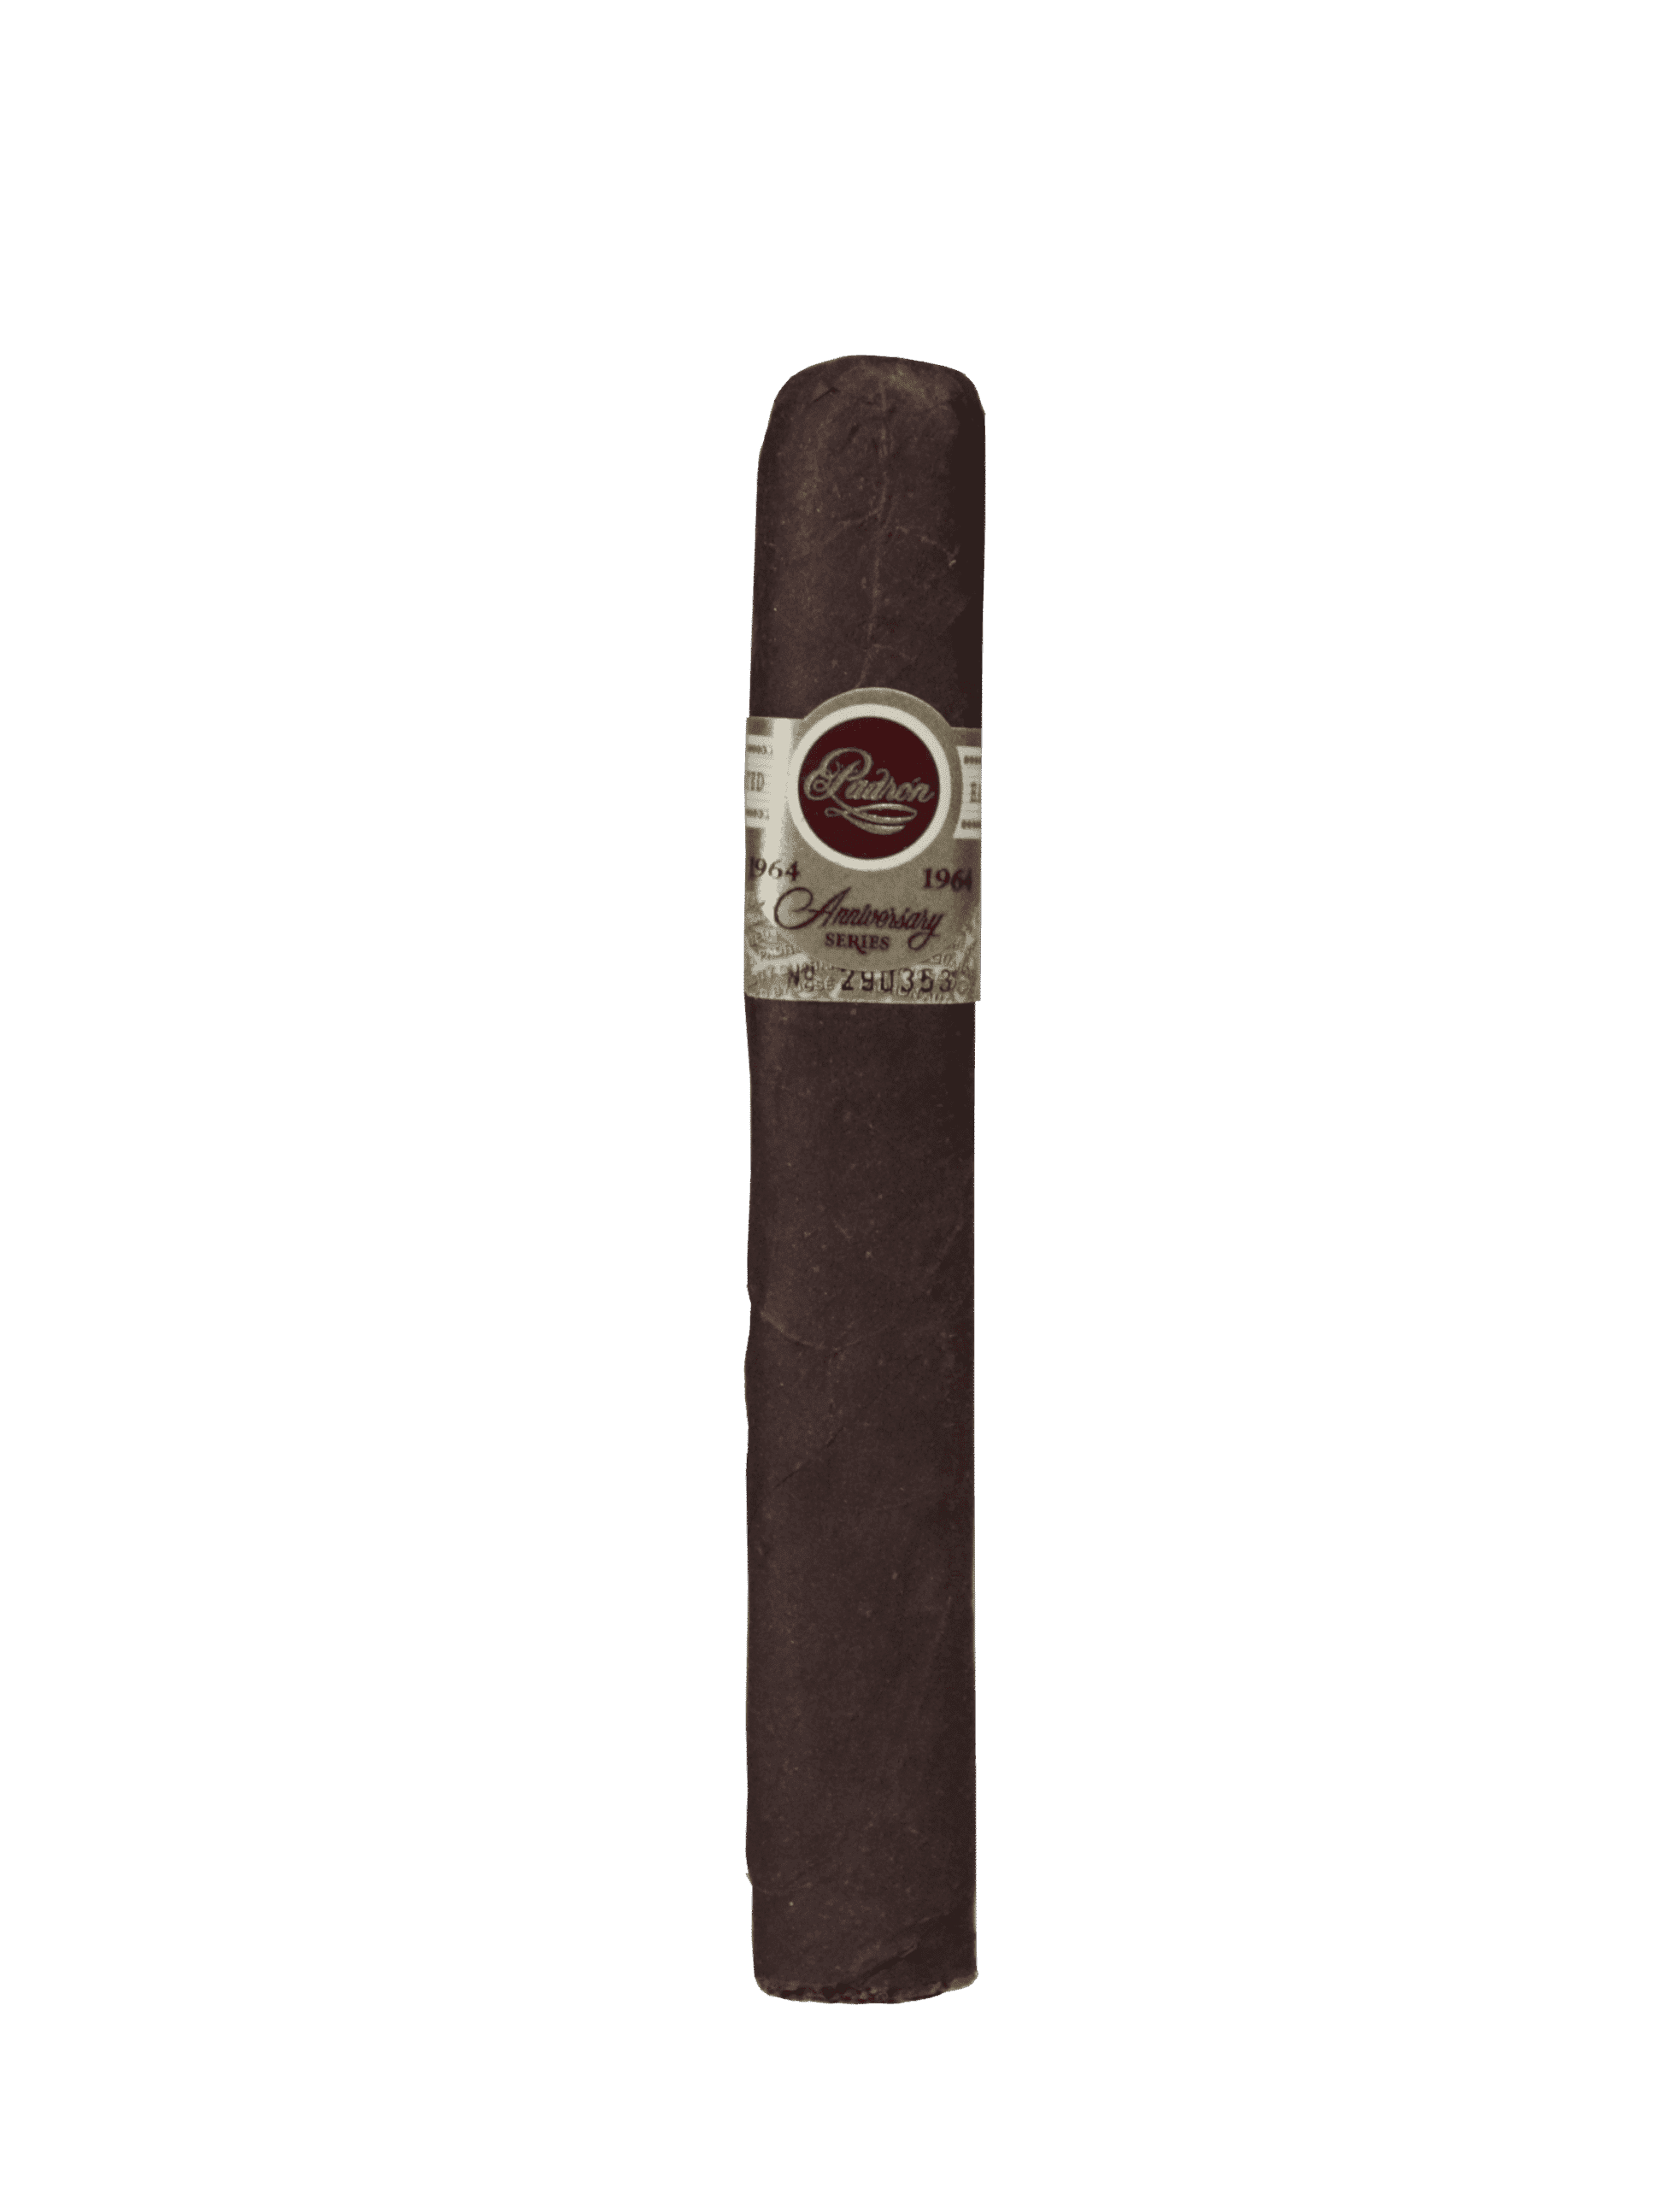 Padron 1964 Anniversary Series Cigars